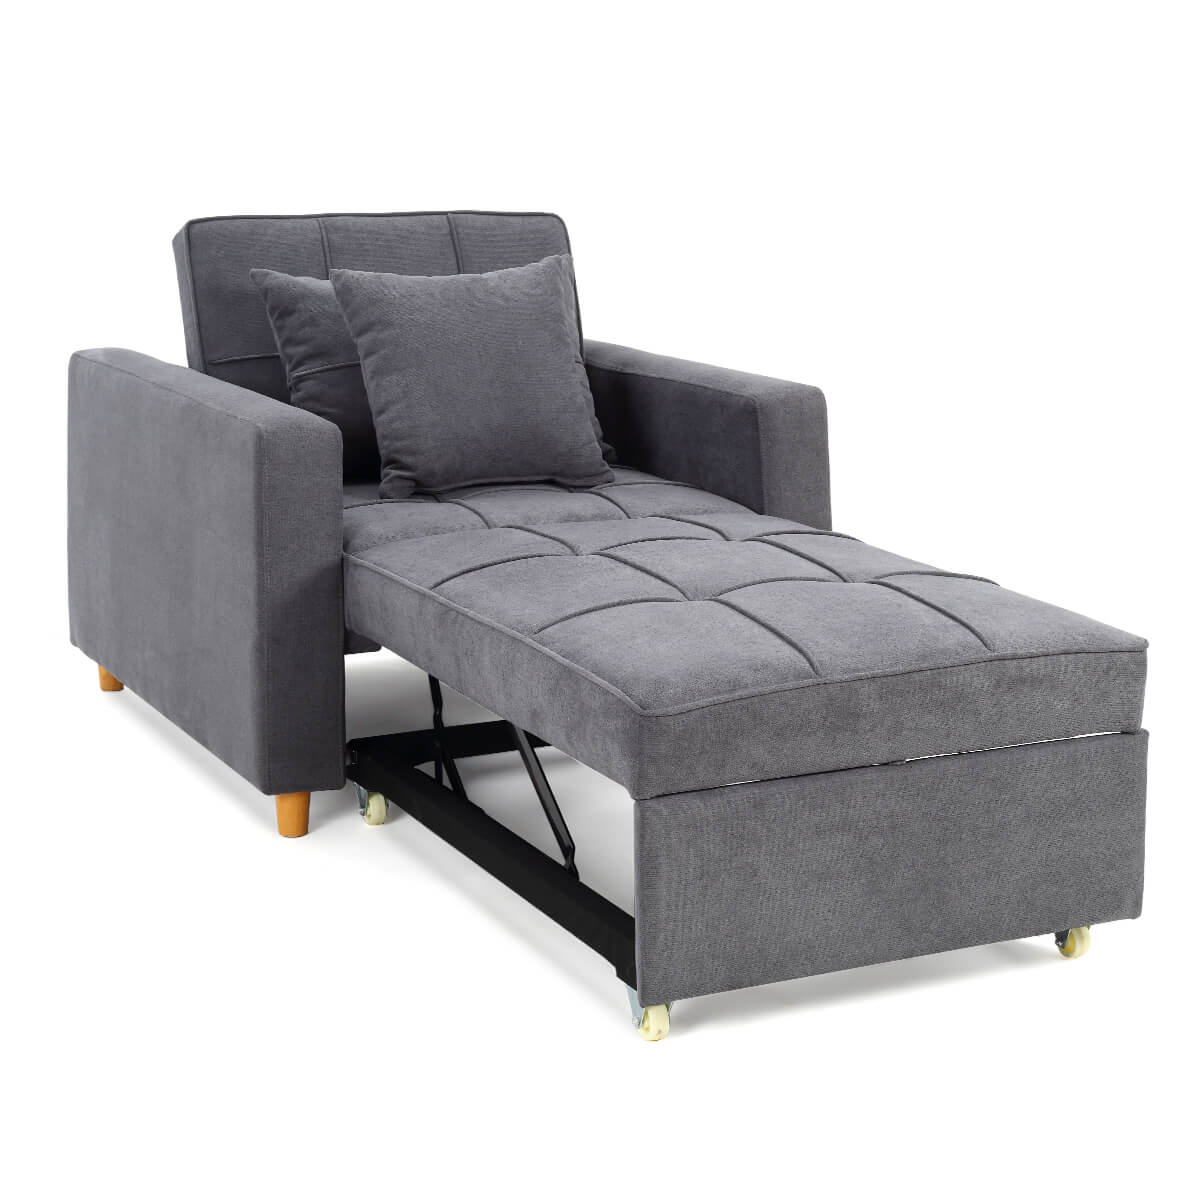 Homrest Sofa Bed 3-in-1 Convertible Chair Multi-Functional Sofa Bed Adjustable Recliner(Dark Grey)